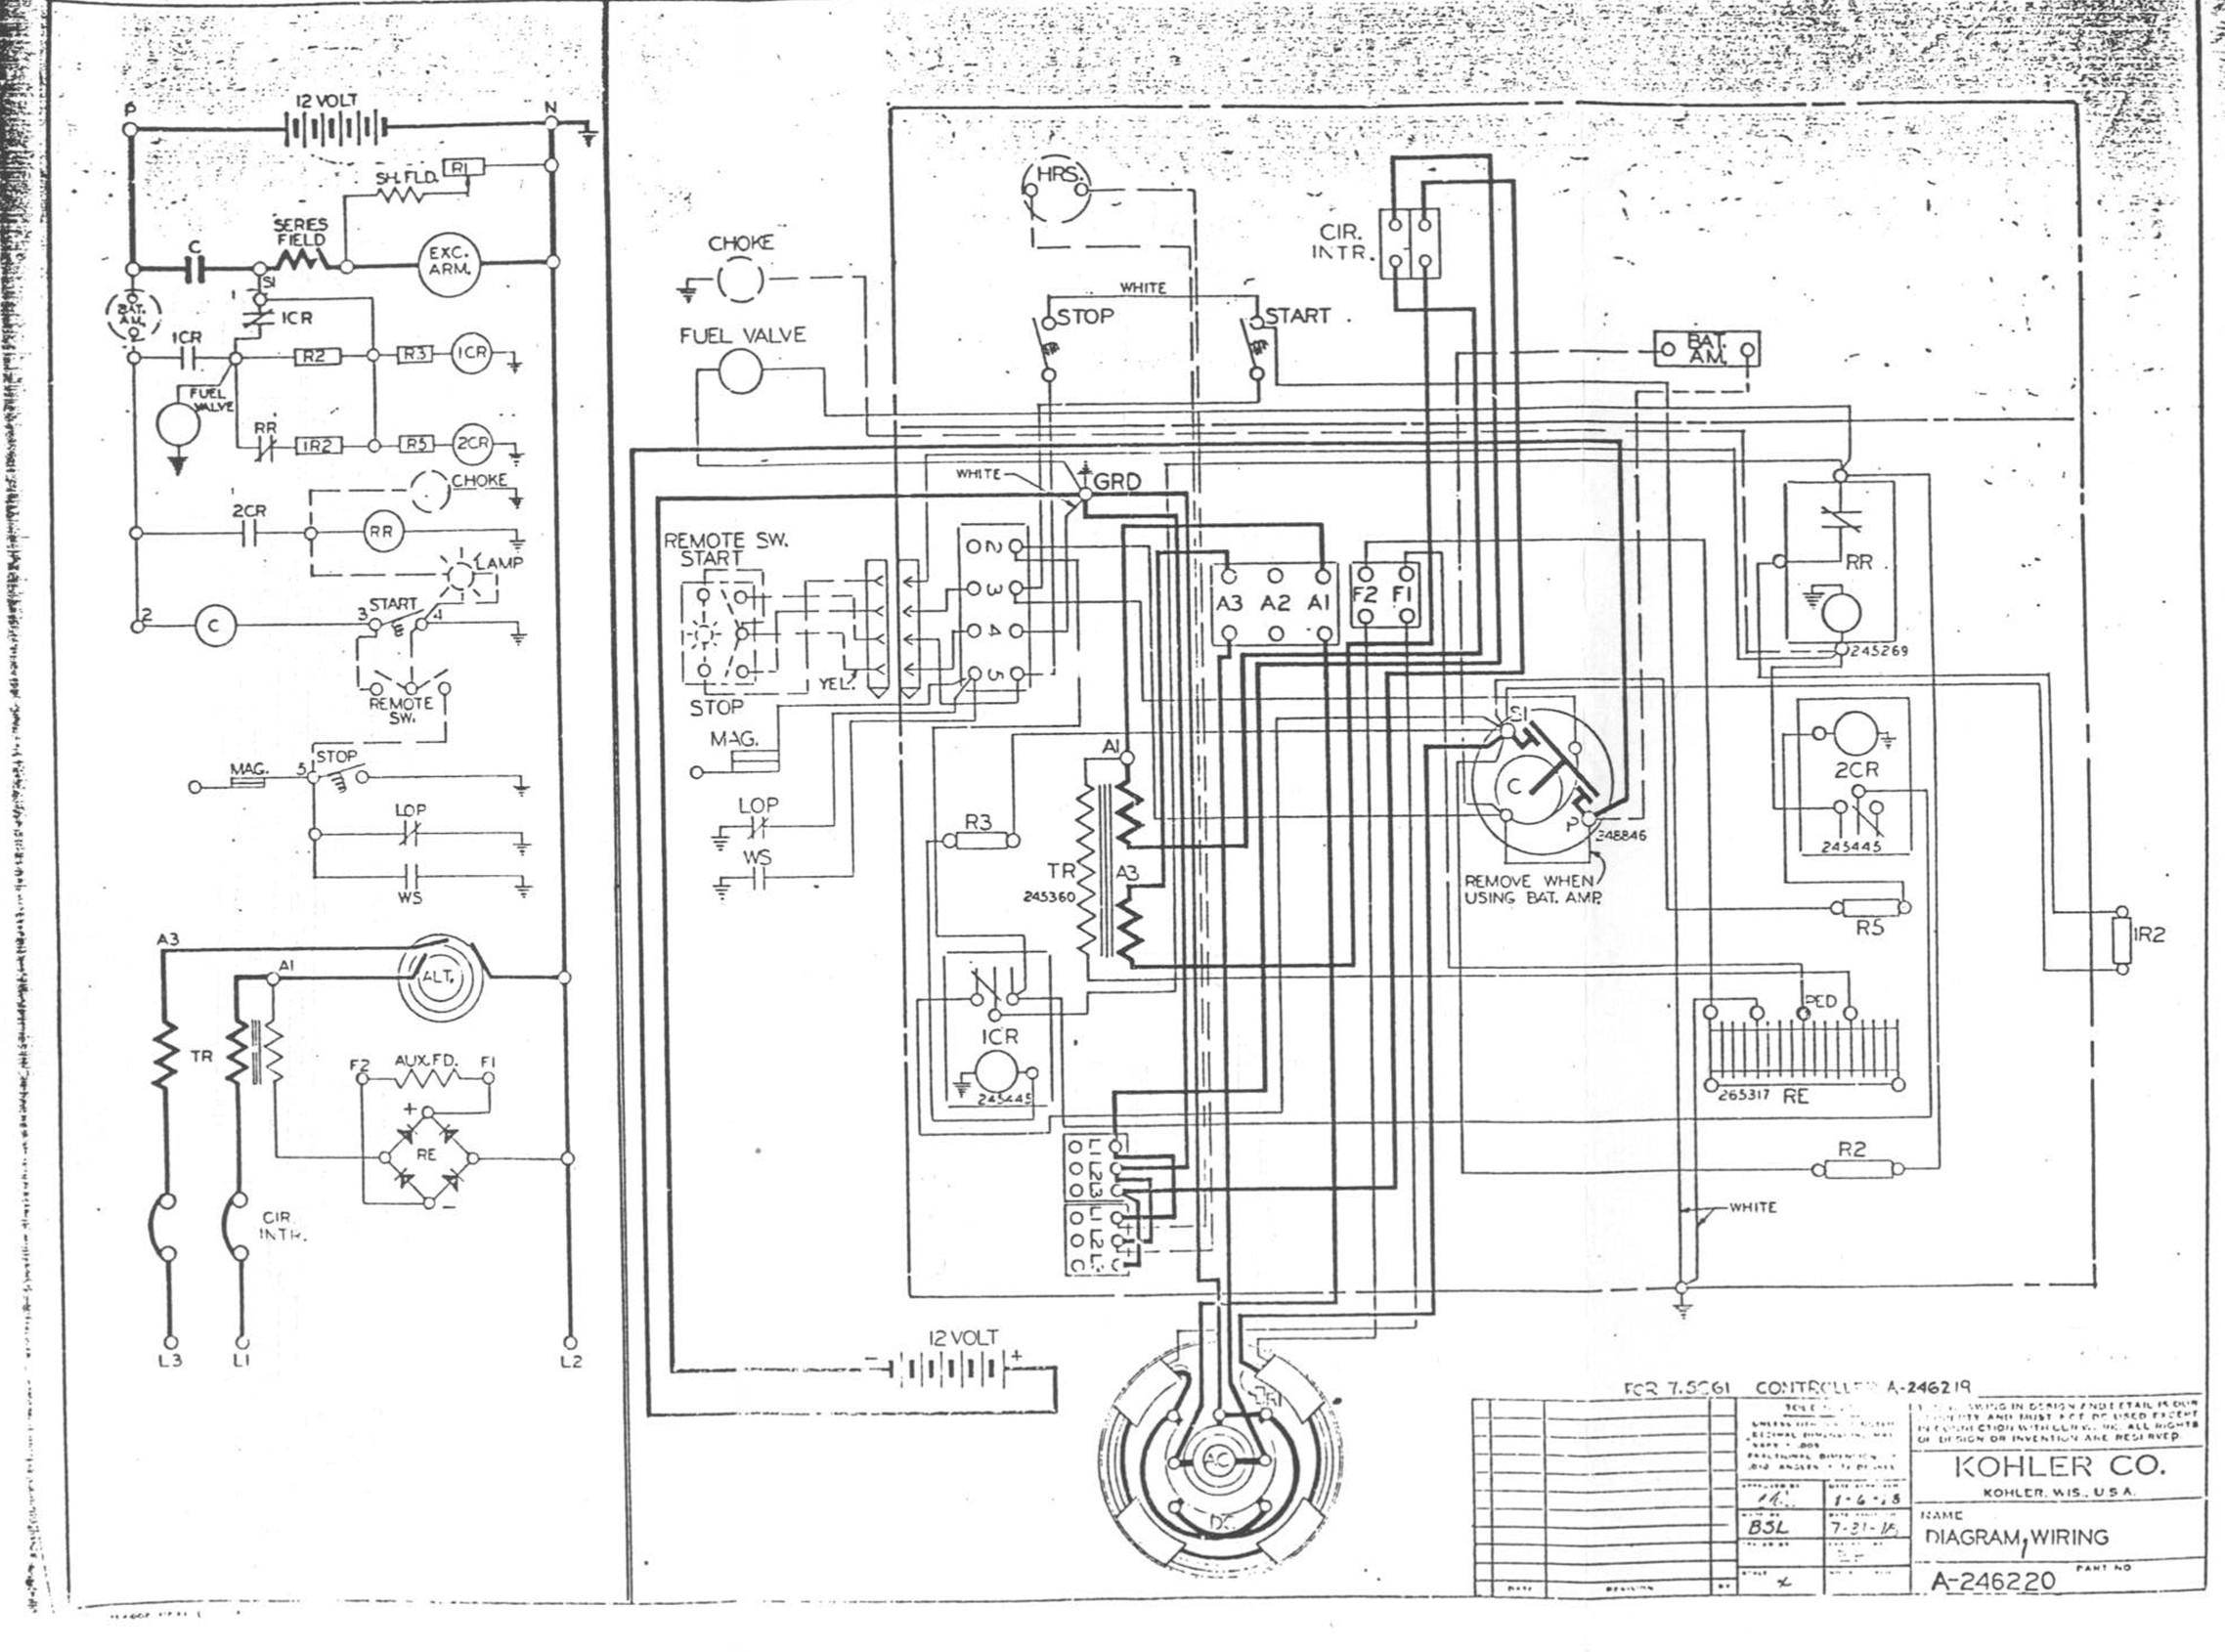 Kohler Generator 4cm21 Service Manual kibrown